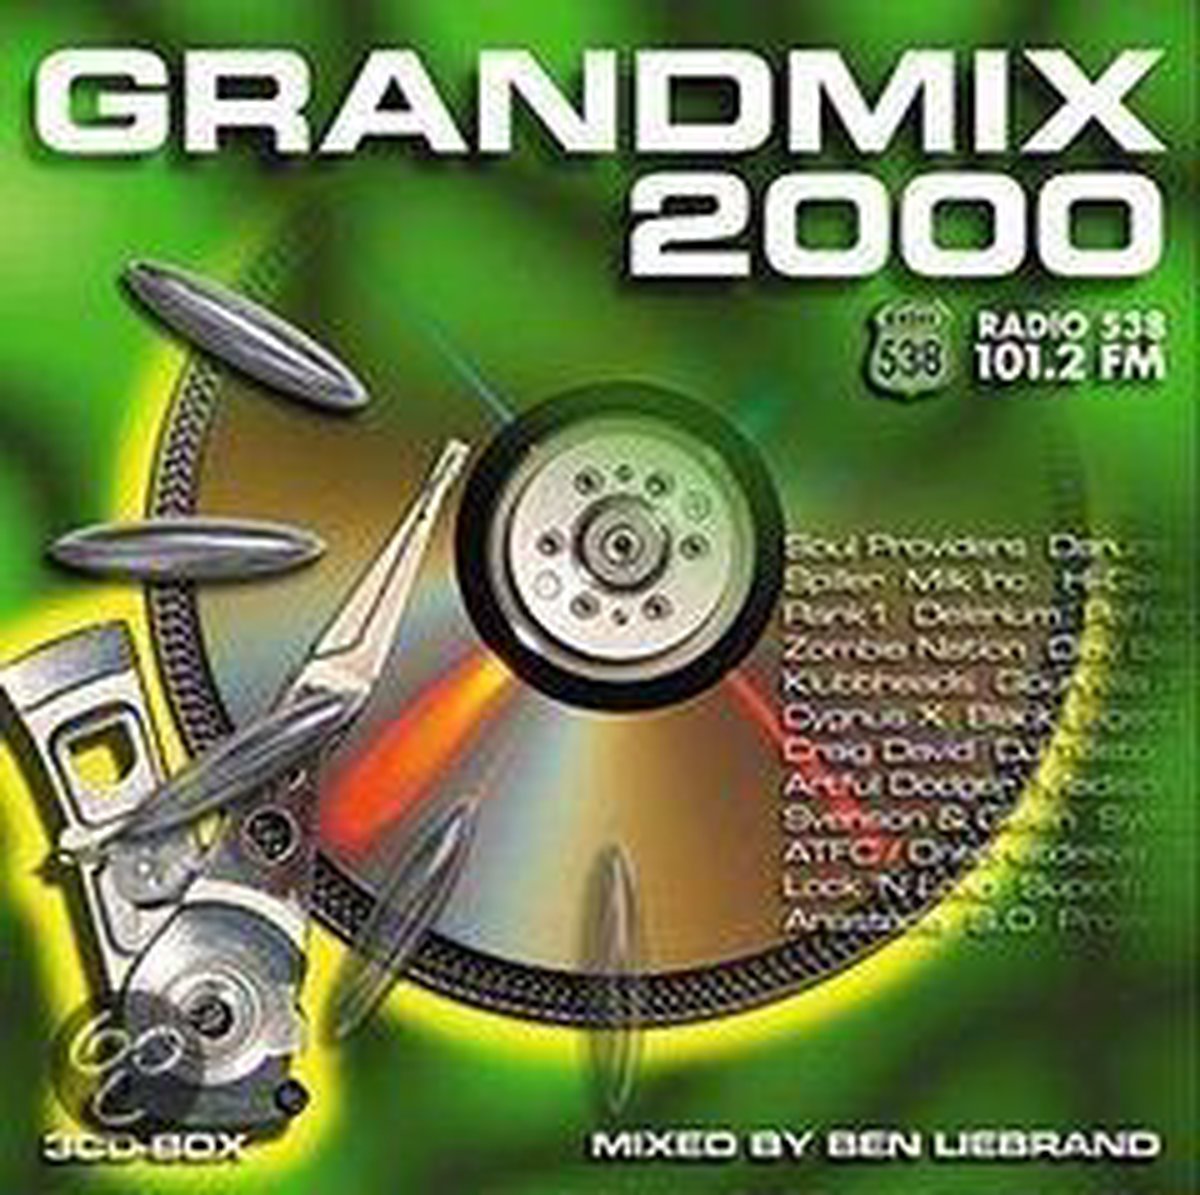 Grandmix 2000 - various artists